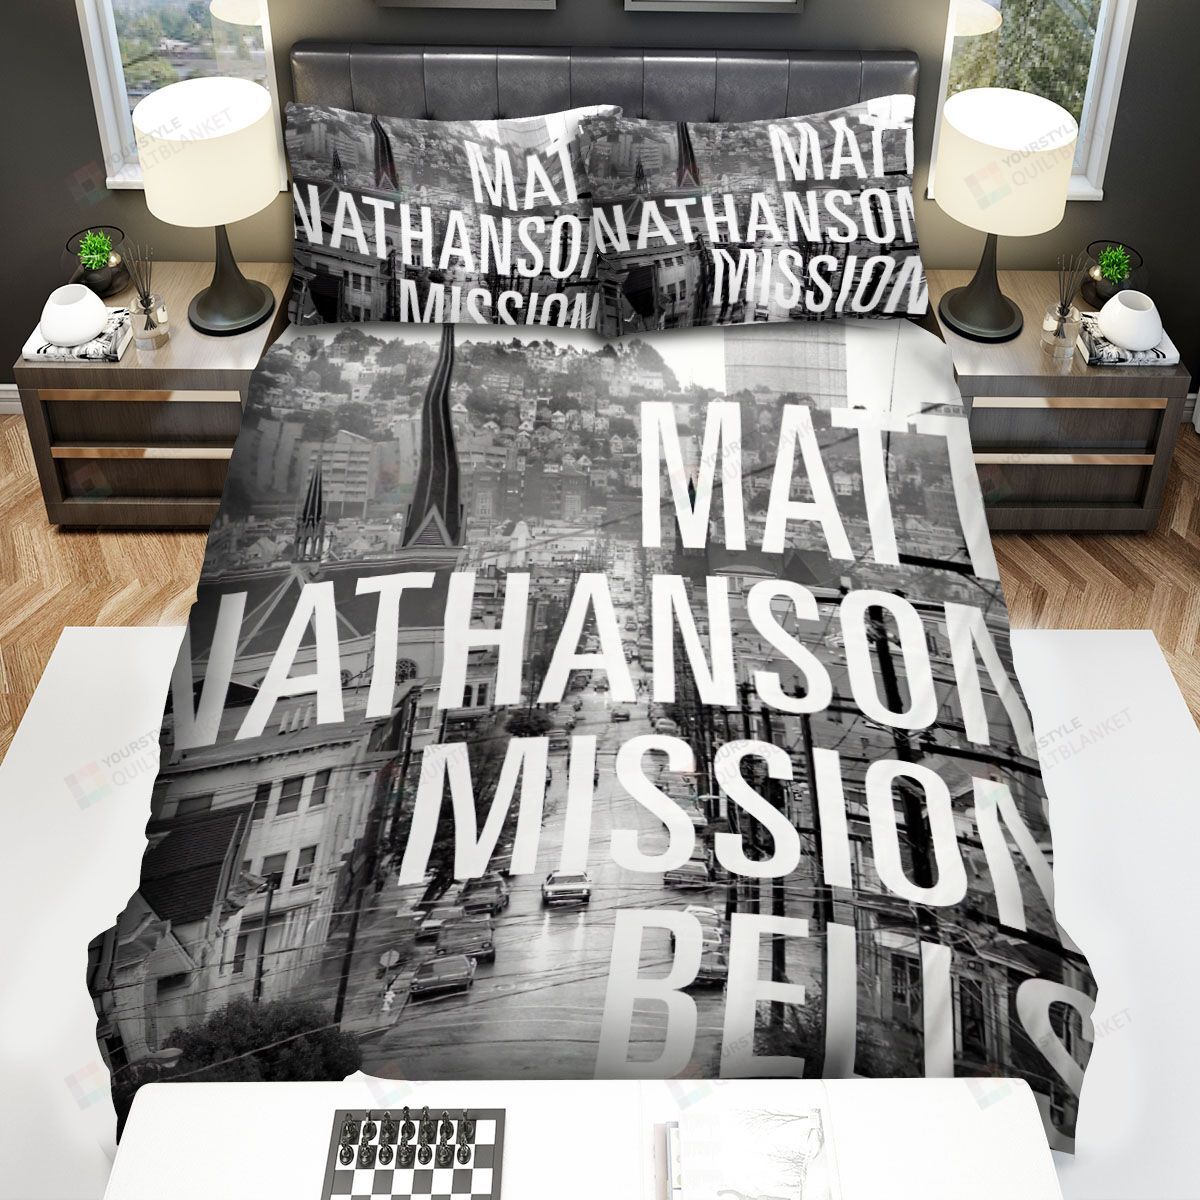 Matt Nathanson Mission Bell Bed Sheets Spread Comforter Duvet Cover Bedding Sets